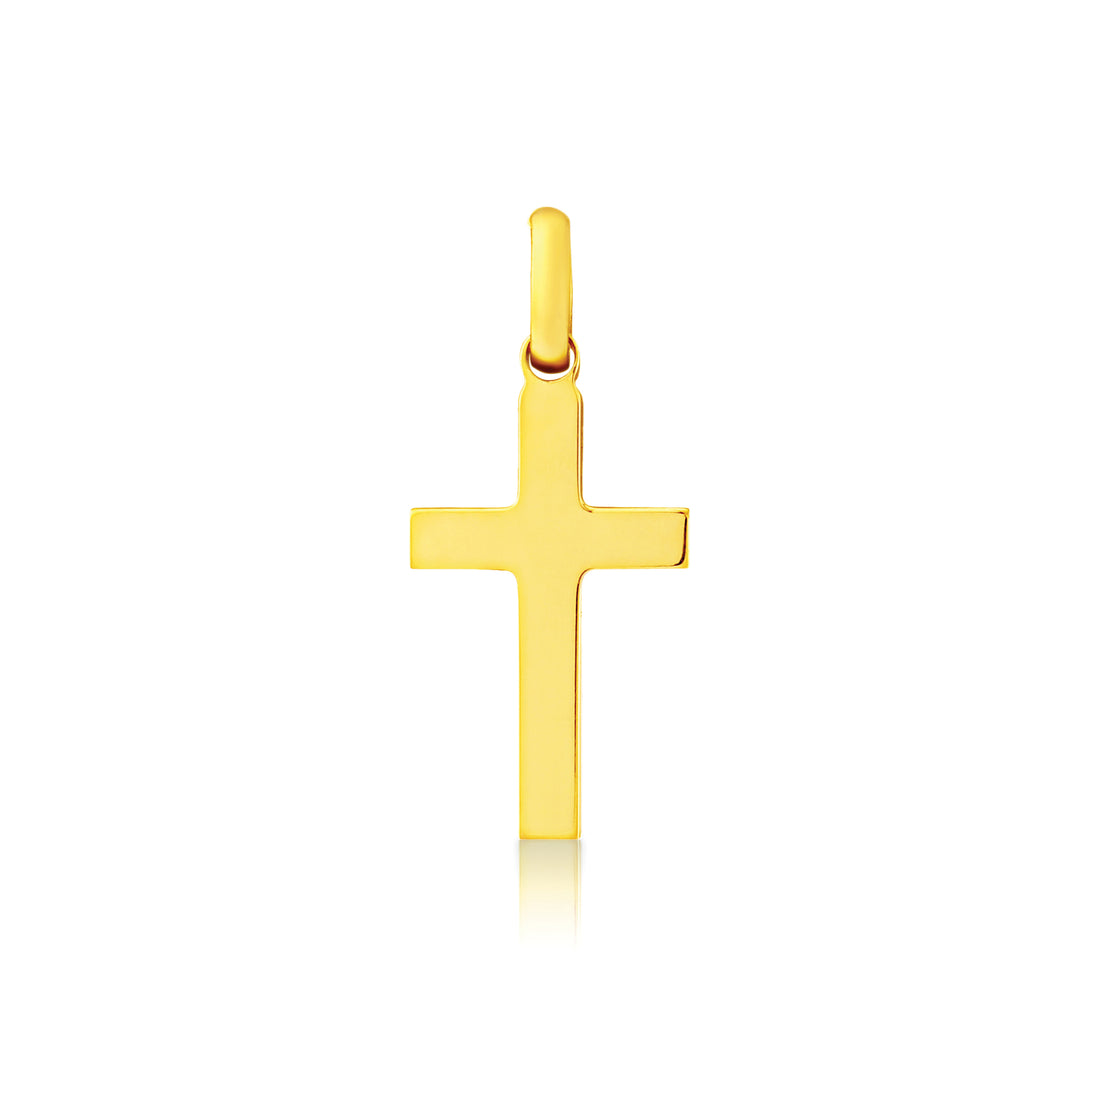 9ct. Yellow Gold Solid Cross Pendant